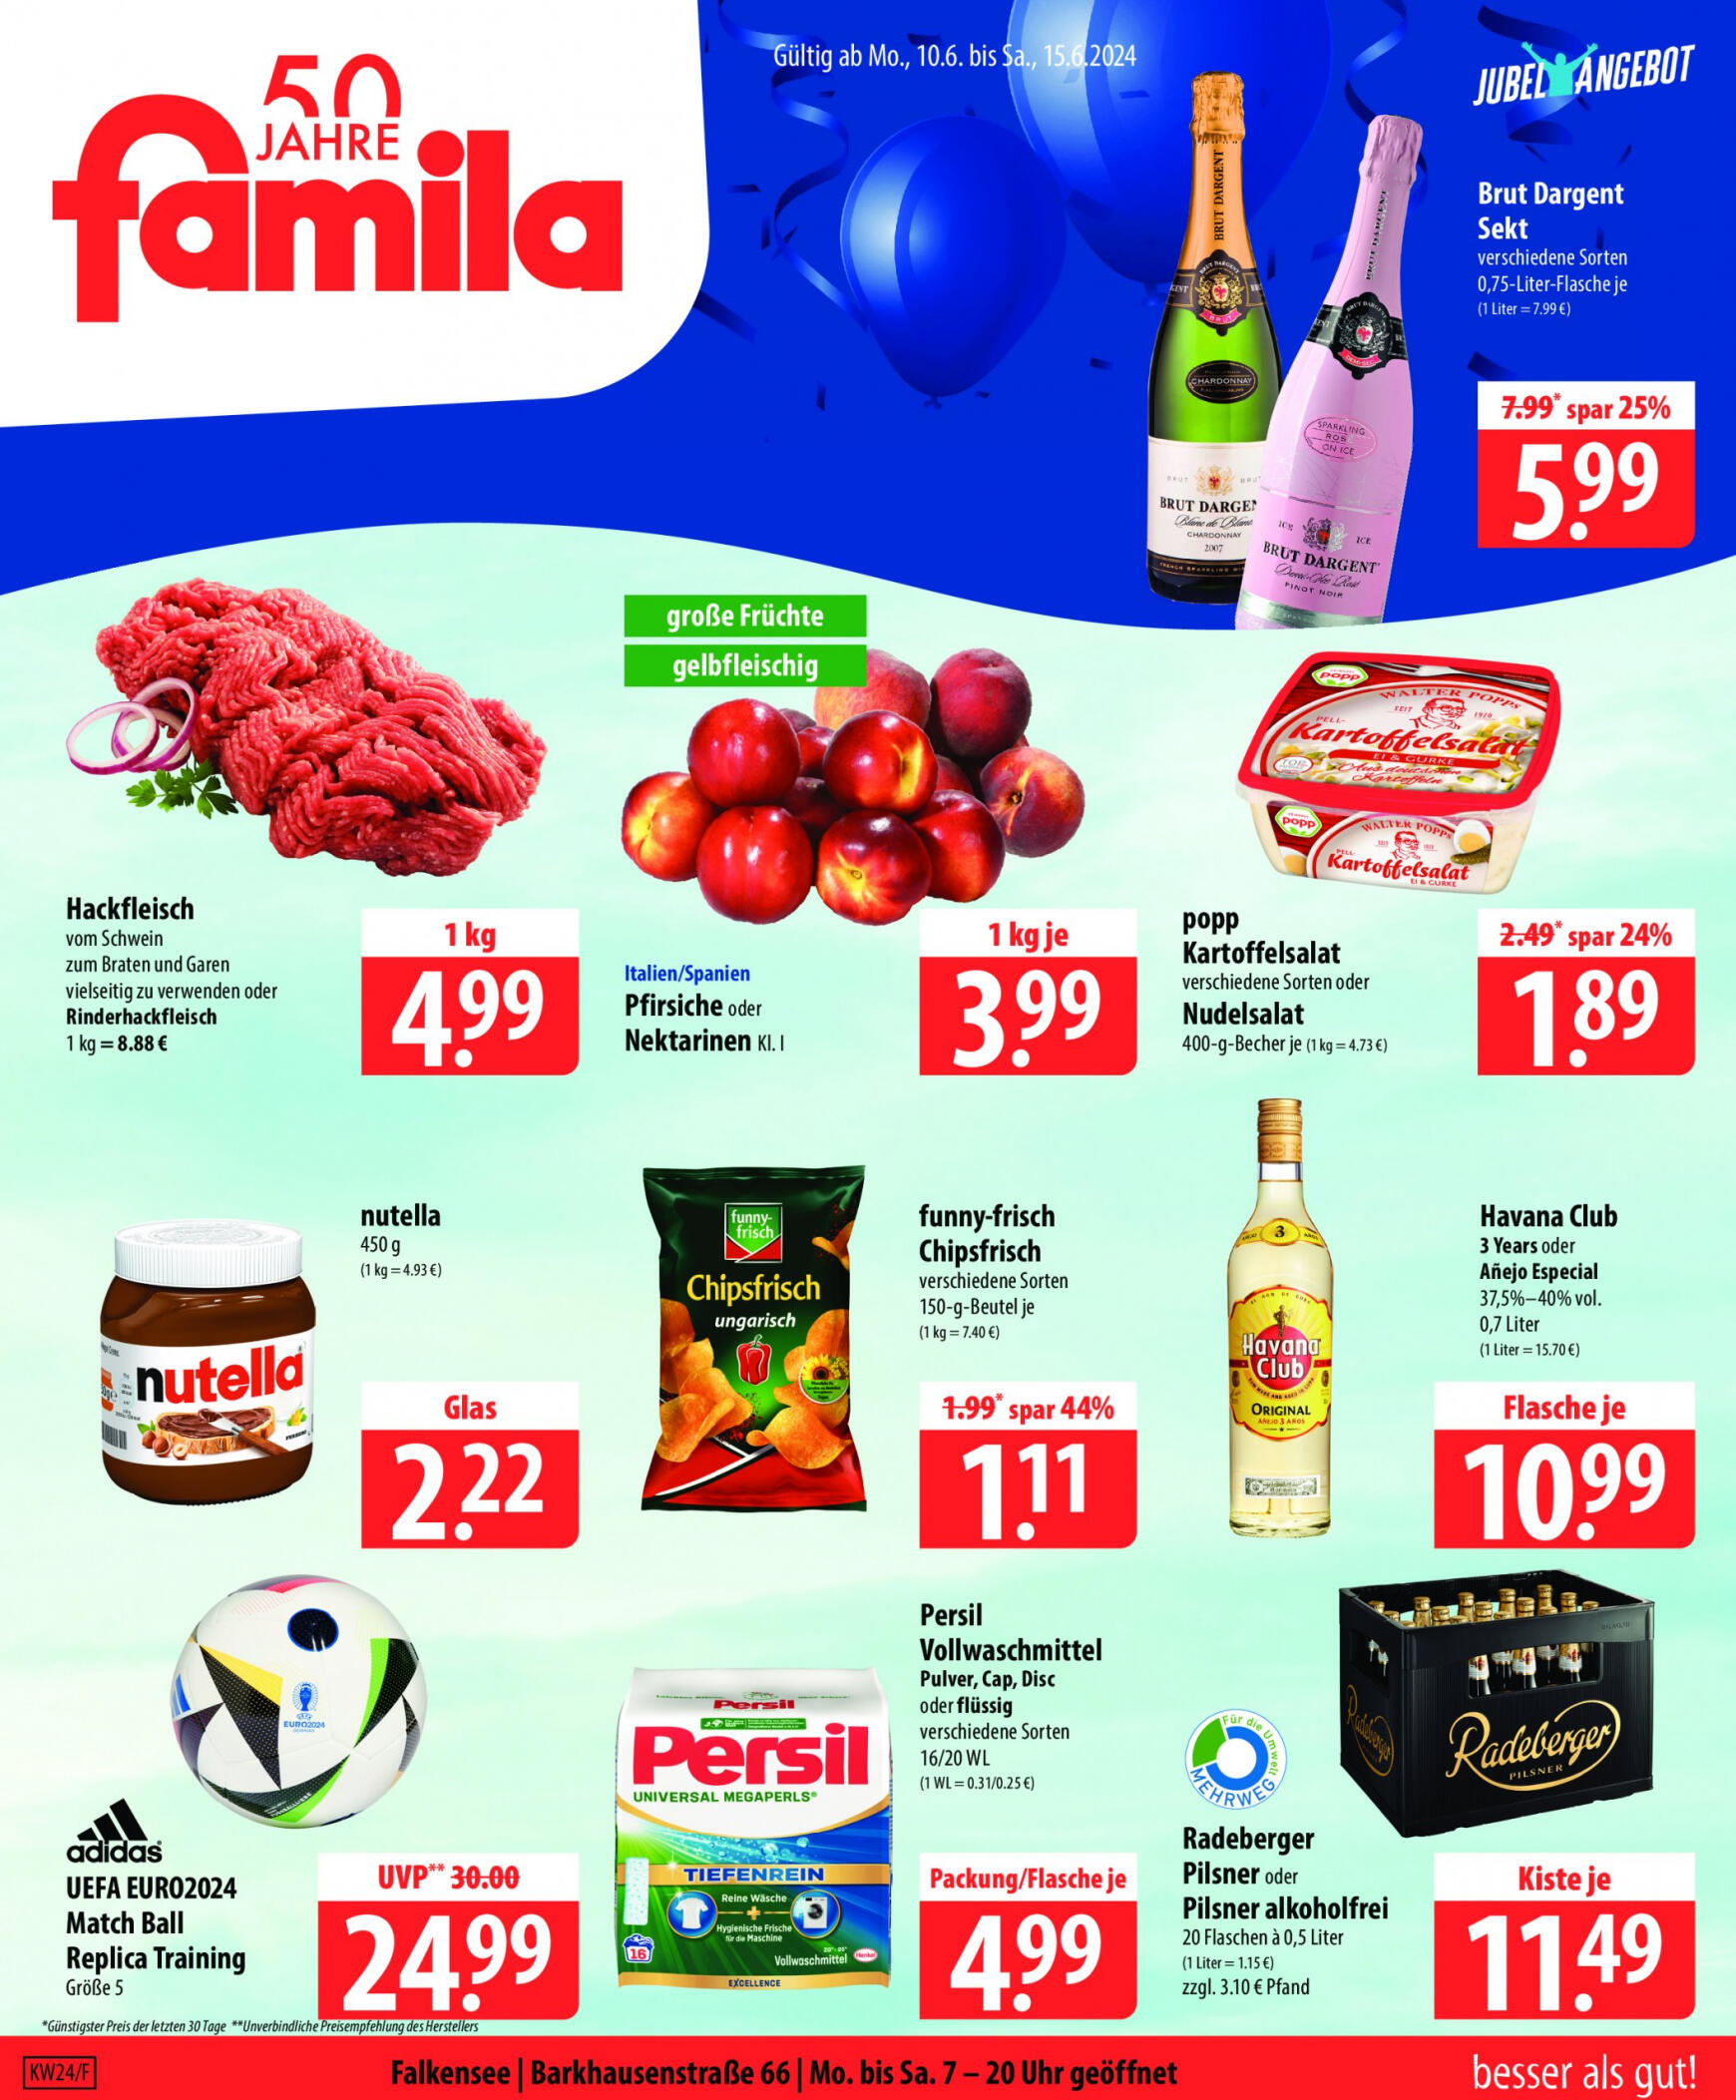 famila-nordost - Flyer Famila Nordost aktuell 10.06. - 15.06. - page: 1